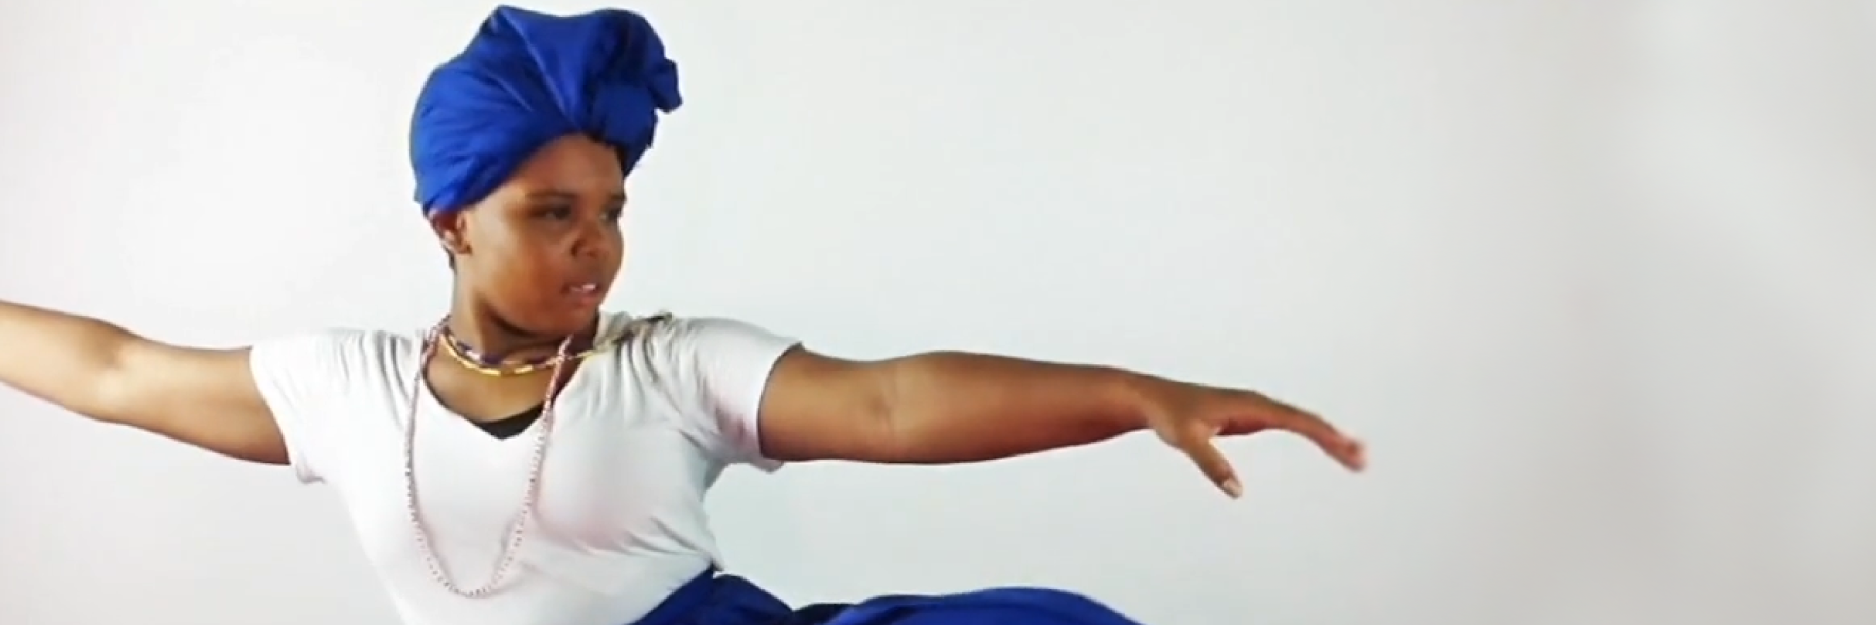 a woman in a white t-shirt and a blue headwrap dances